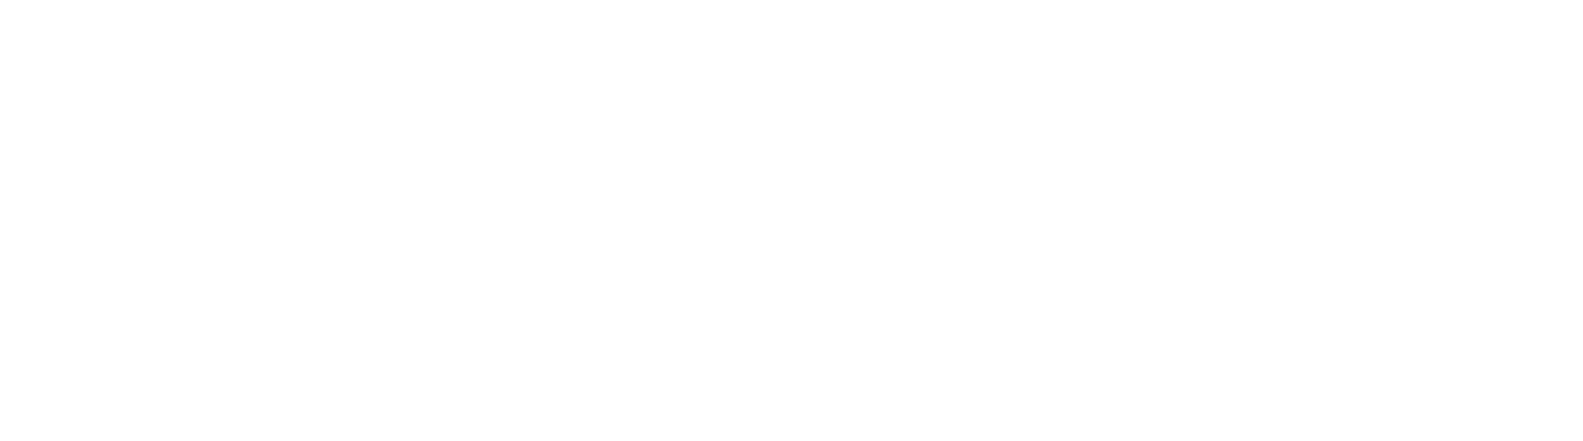 Vaalco Energy
 logo large for dark backgrounds (transparent PNG)